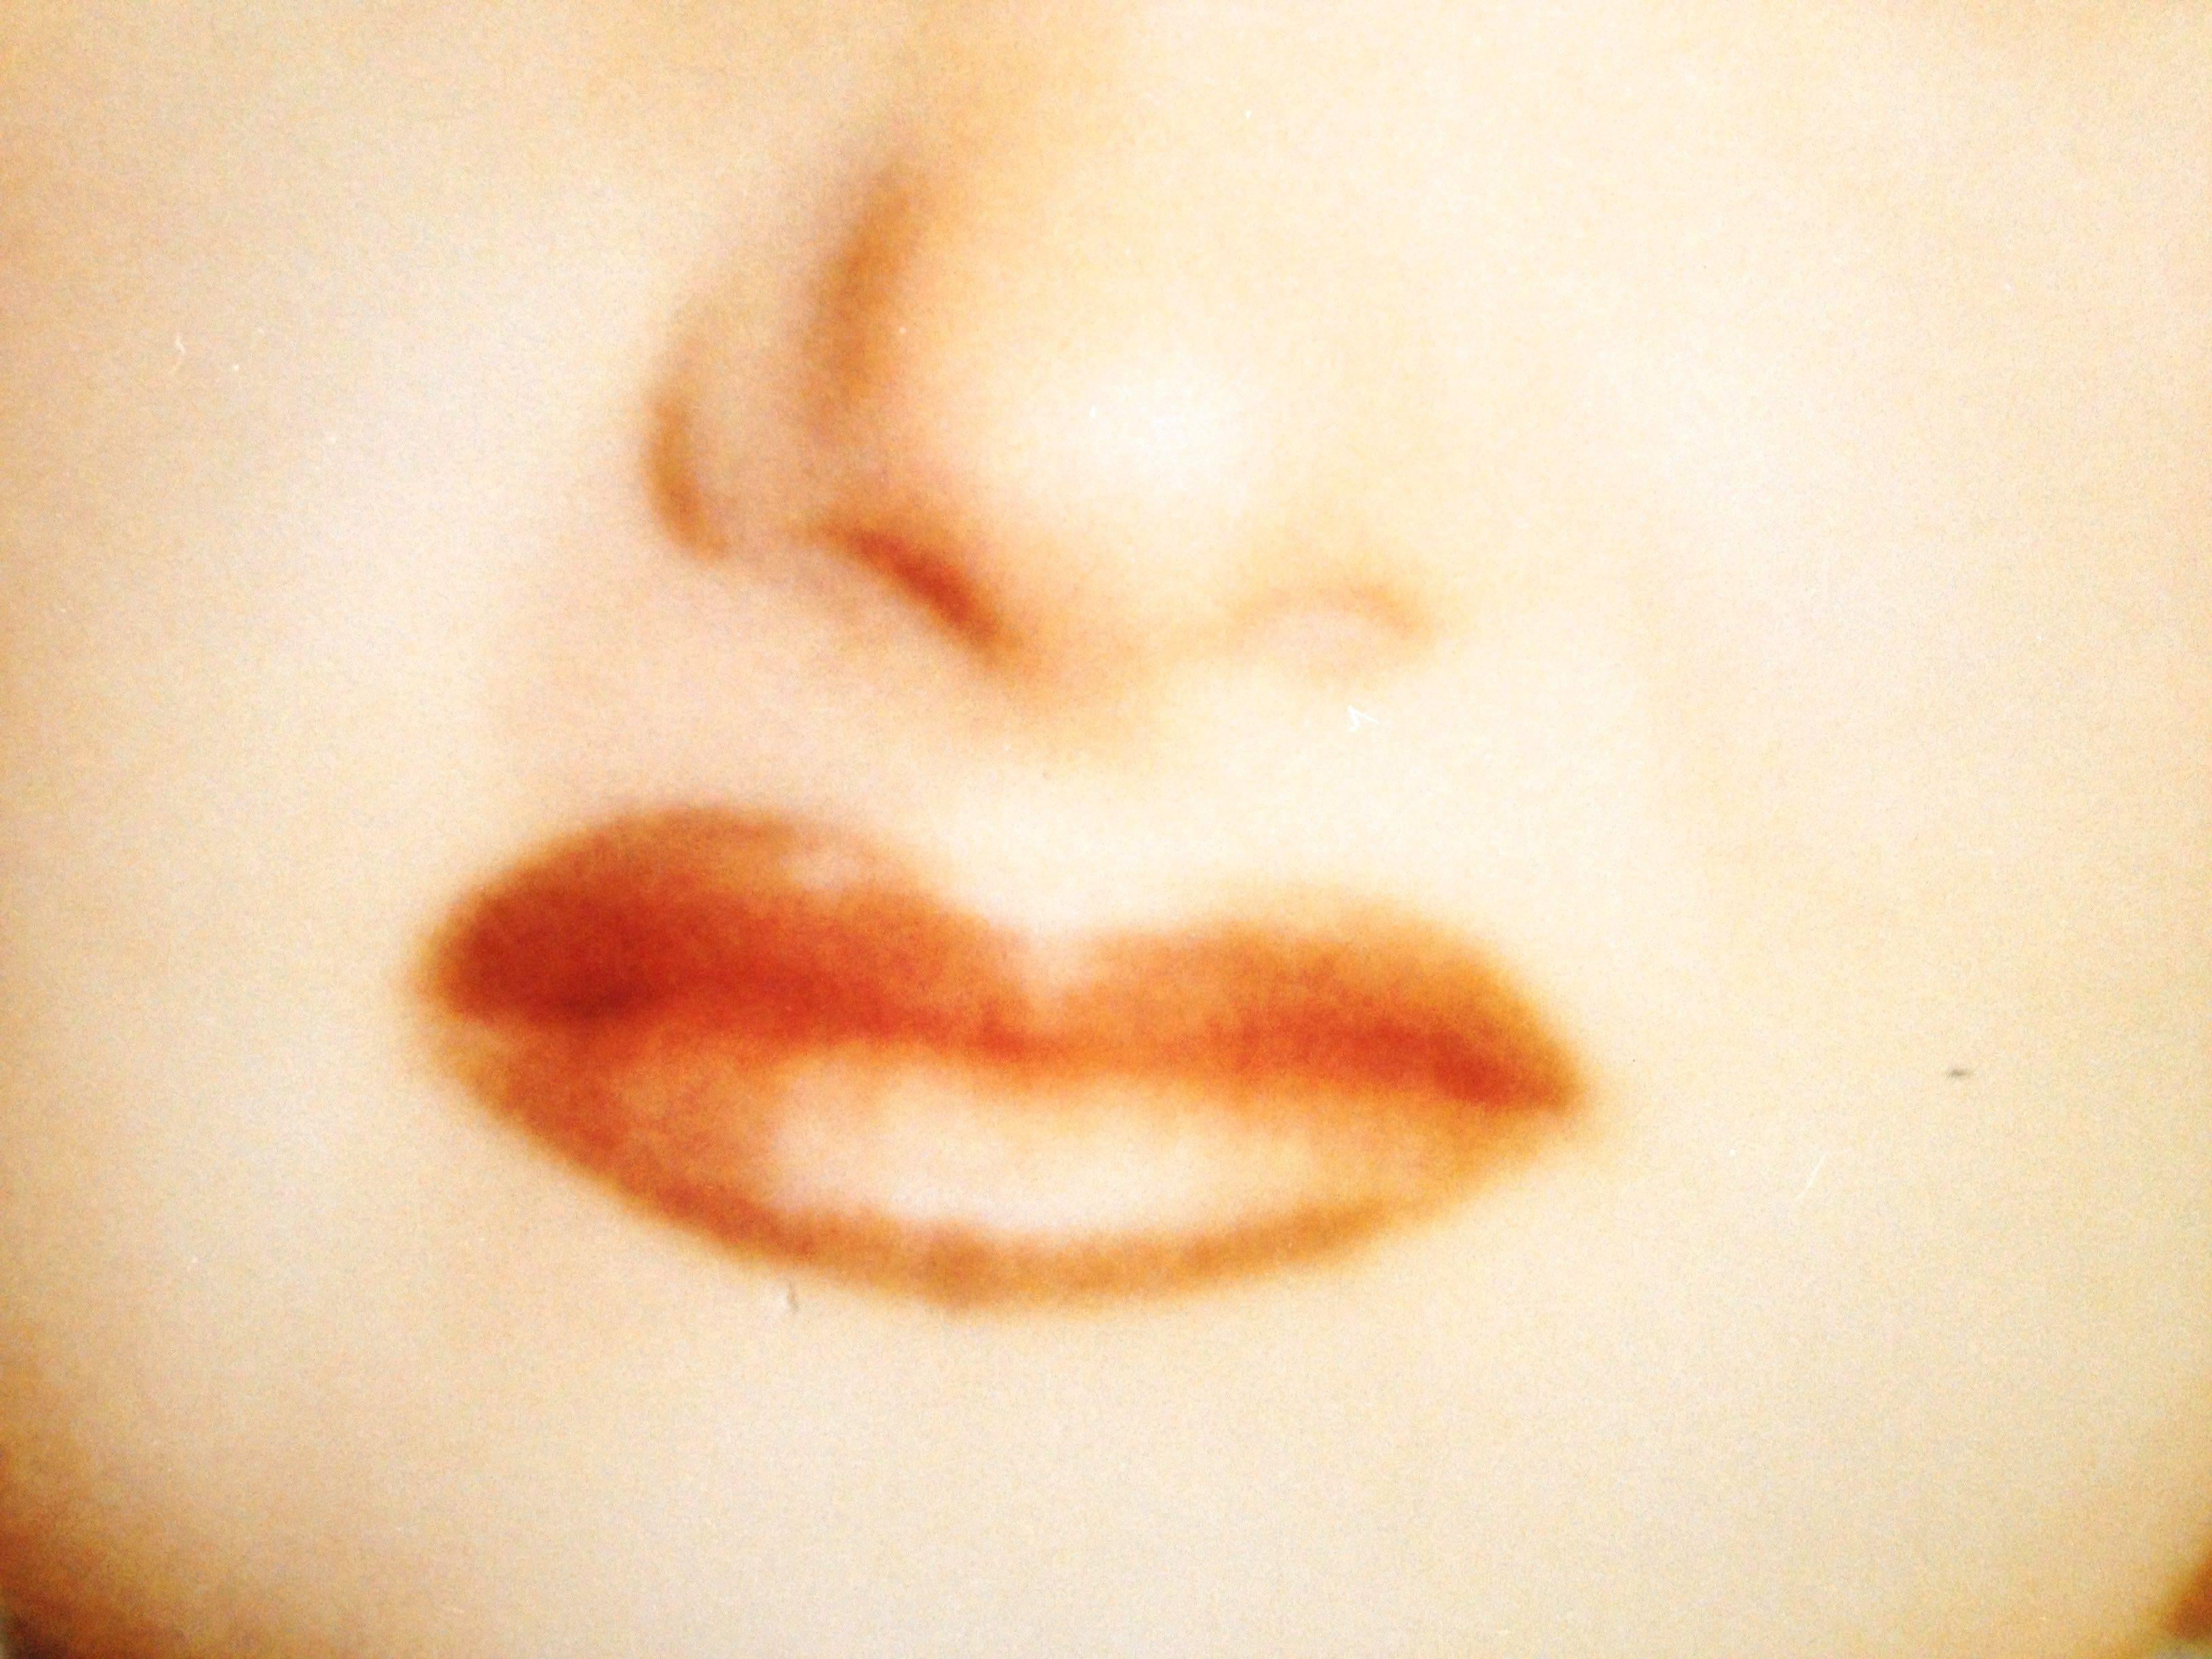 Kirsten Red Lips (California Blue Screen) - Outsider Art Photograph by Stefanie Schneider